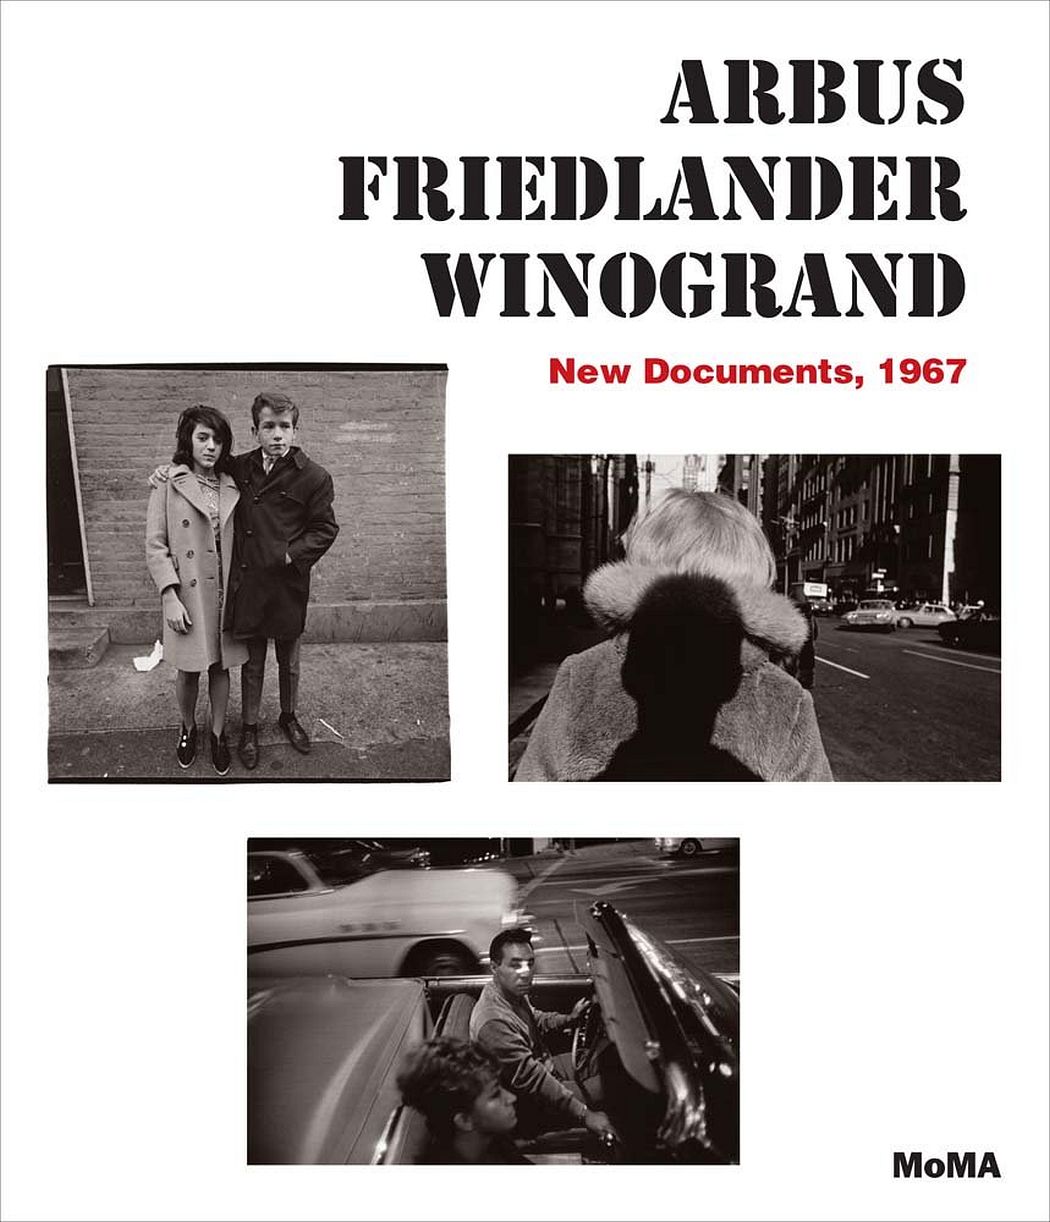 Arbus Friedlander Winogrand: New Documents, 1967